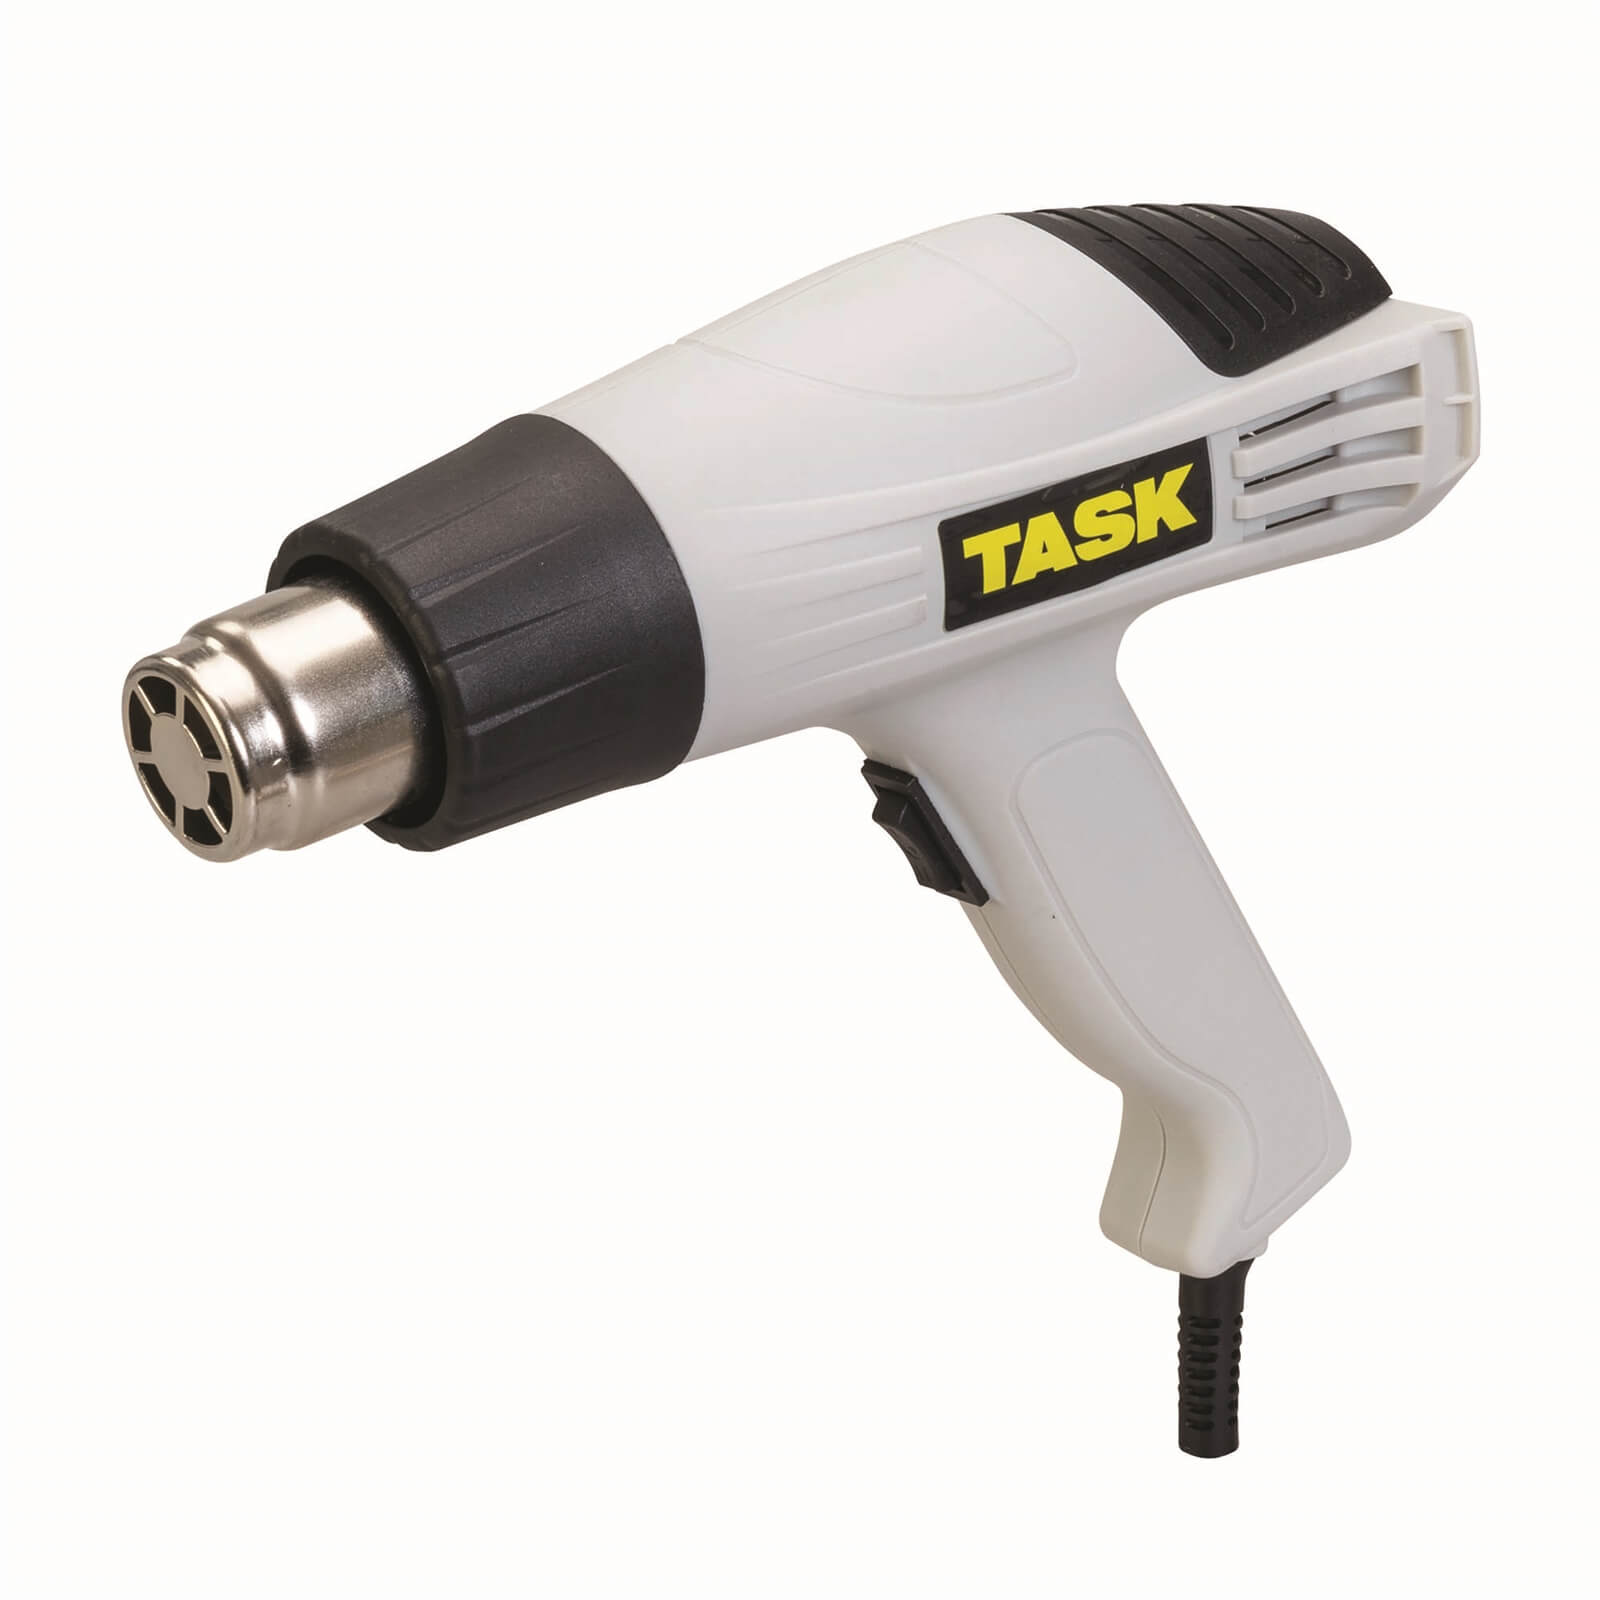 TASK 2000W Heat Gun